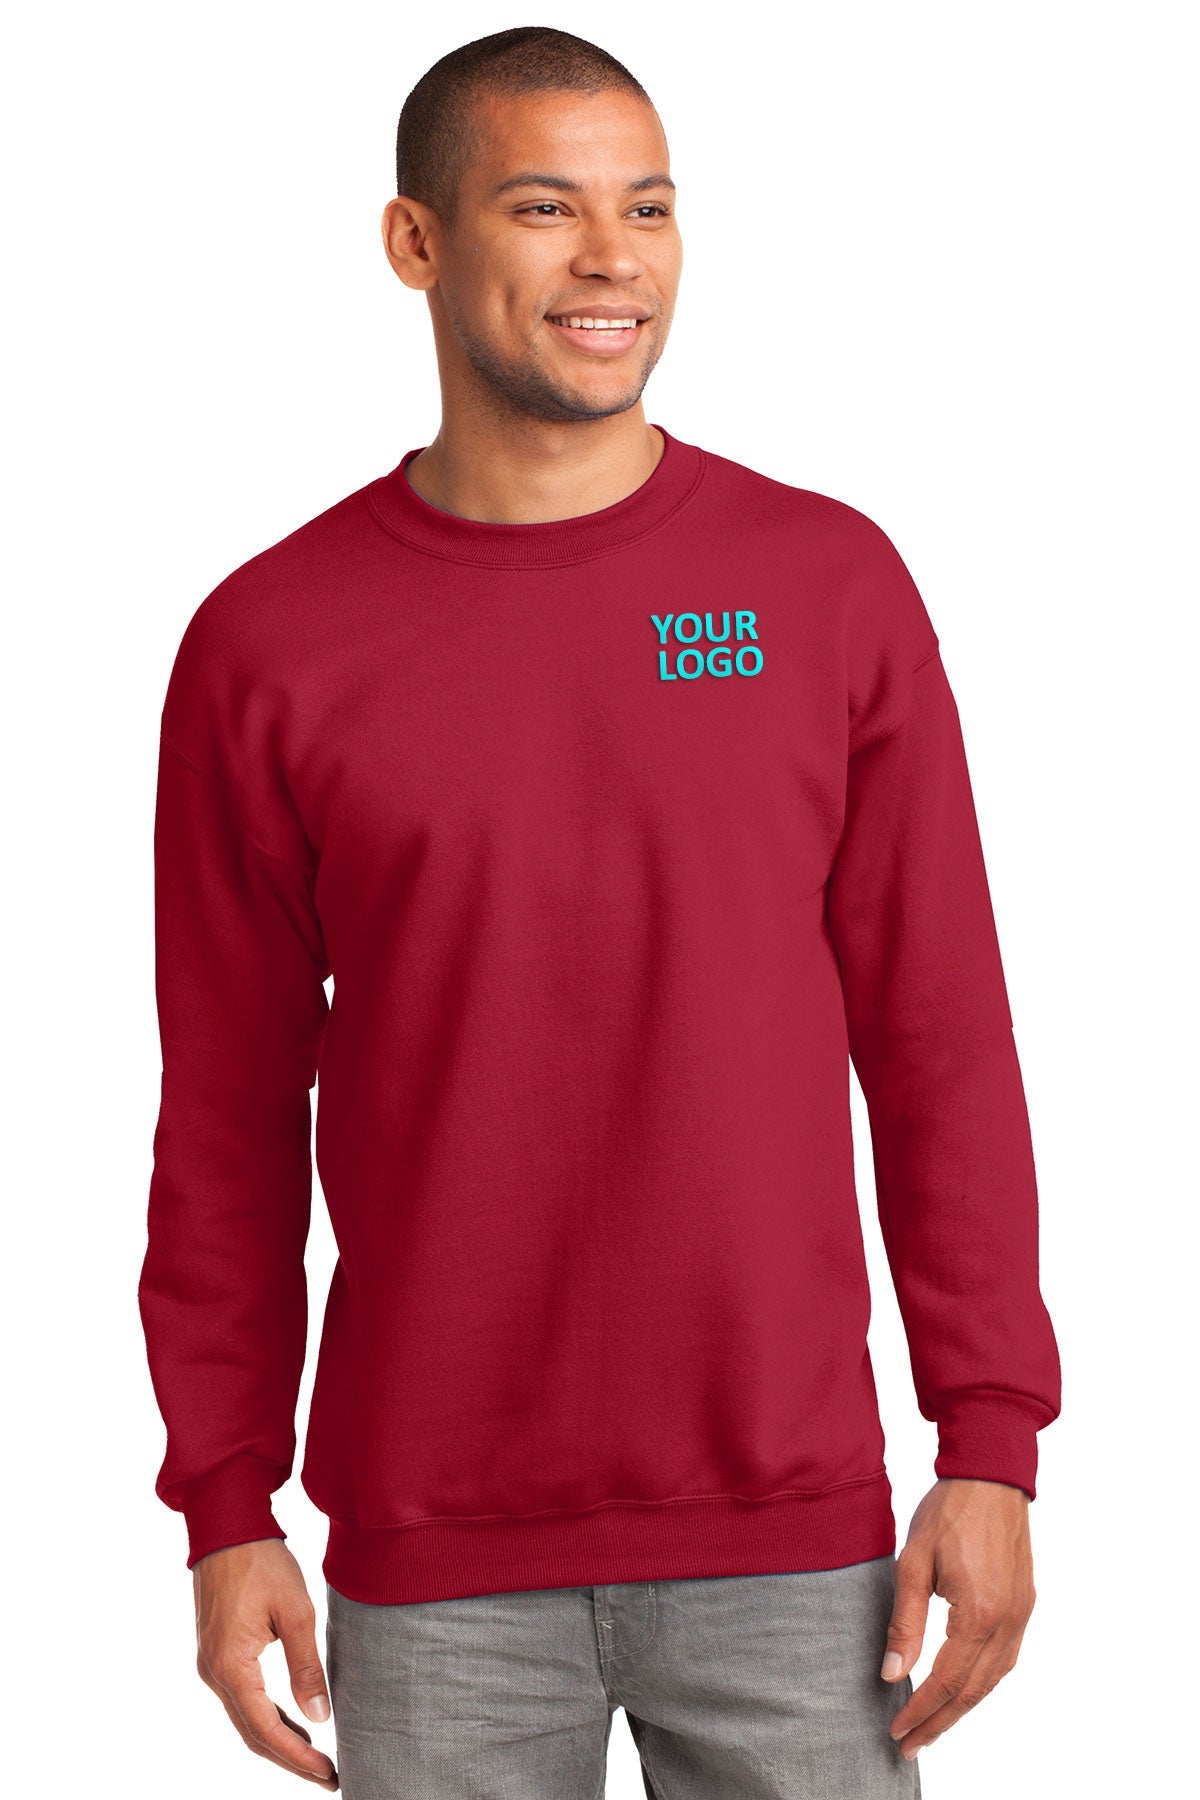 Port & Company Red PC90T custom design sweatshirts